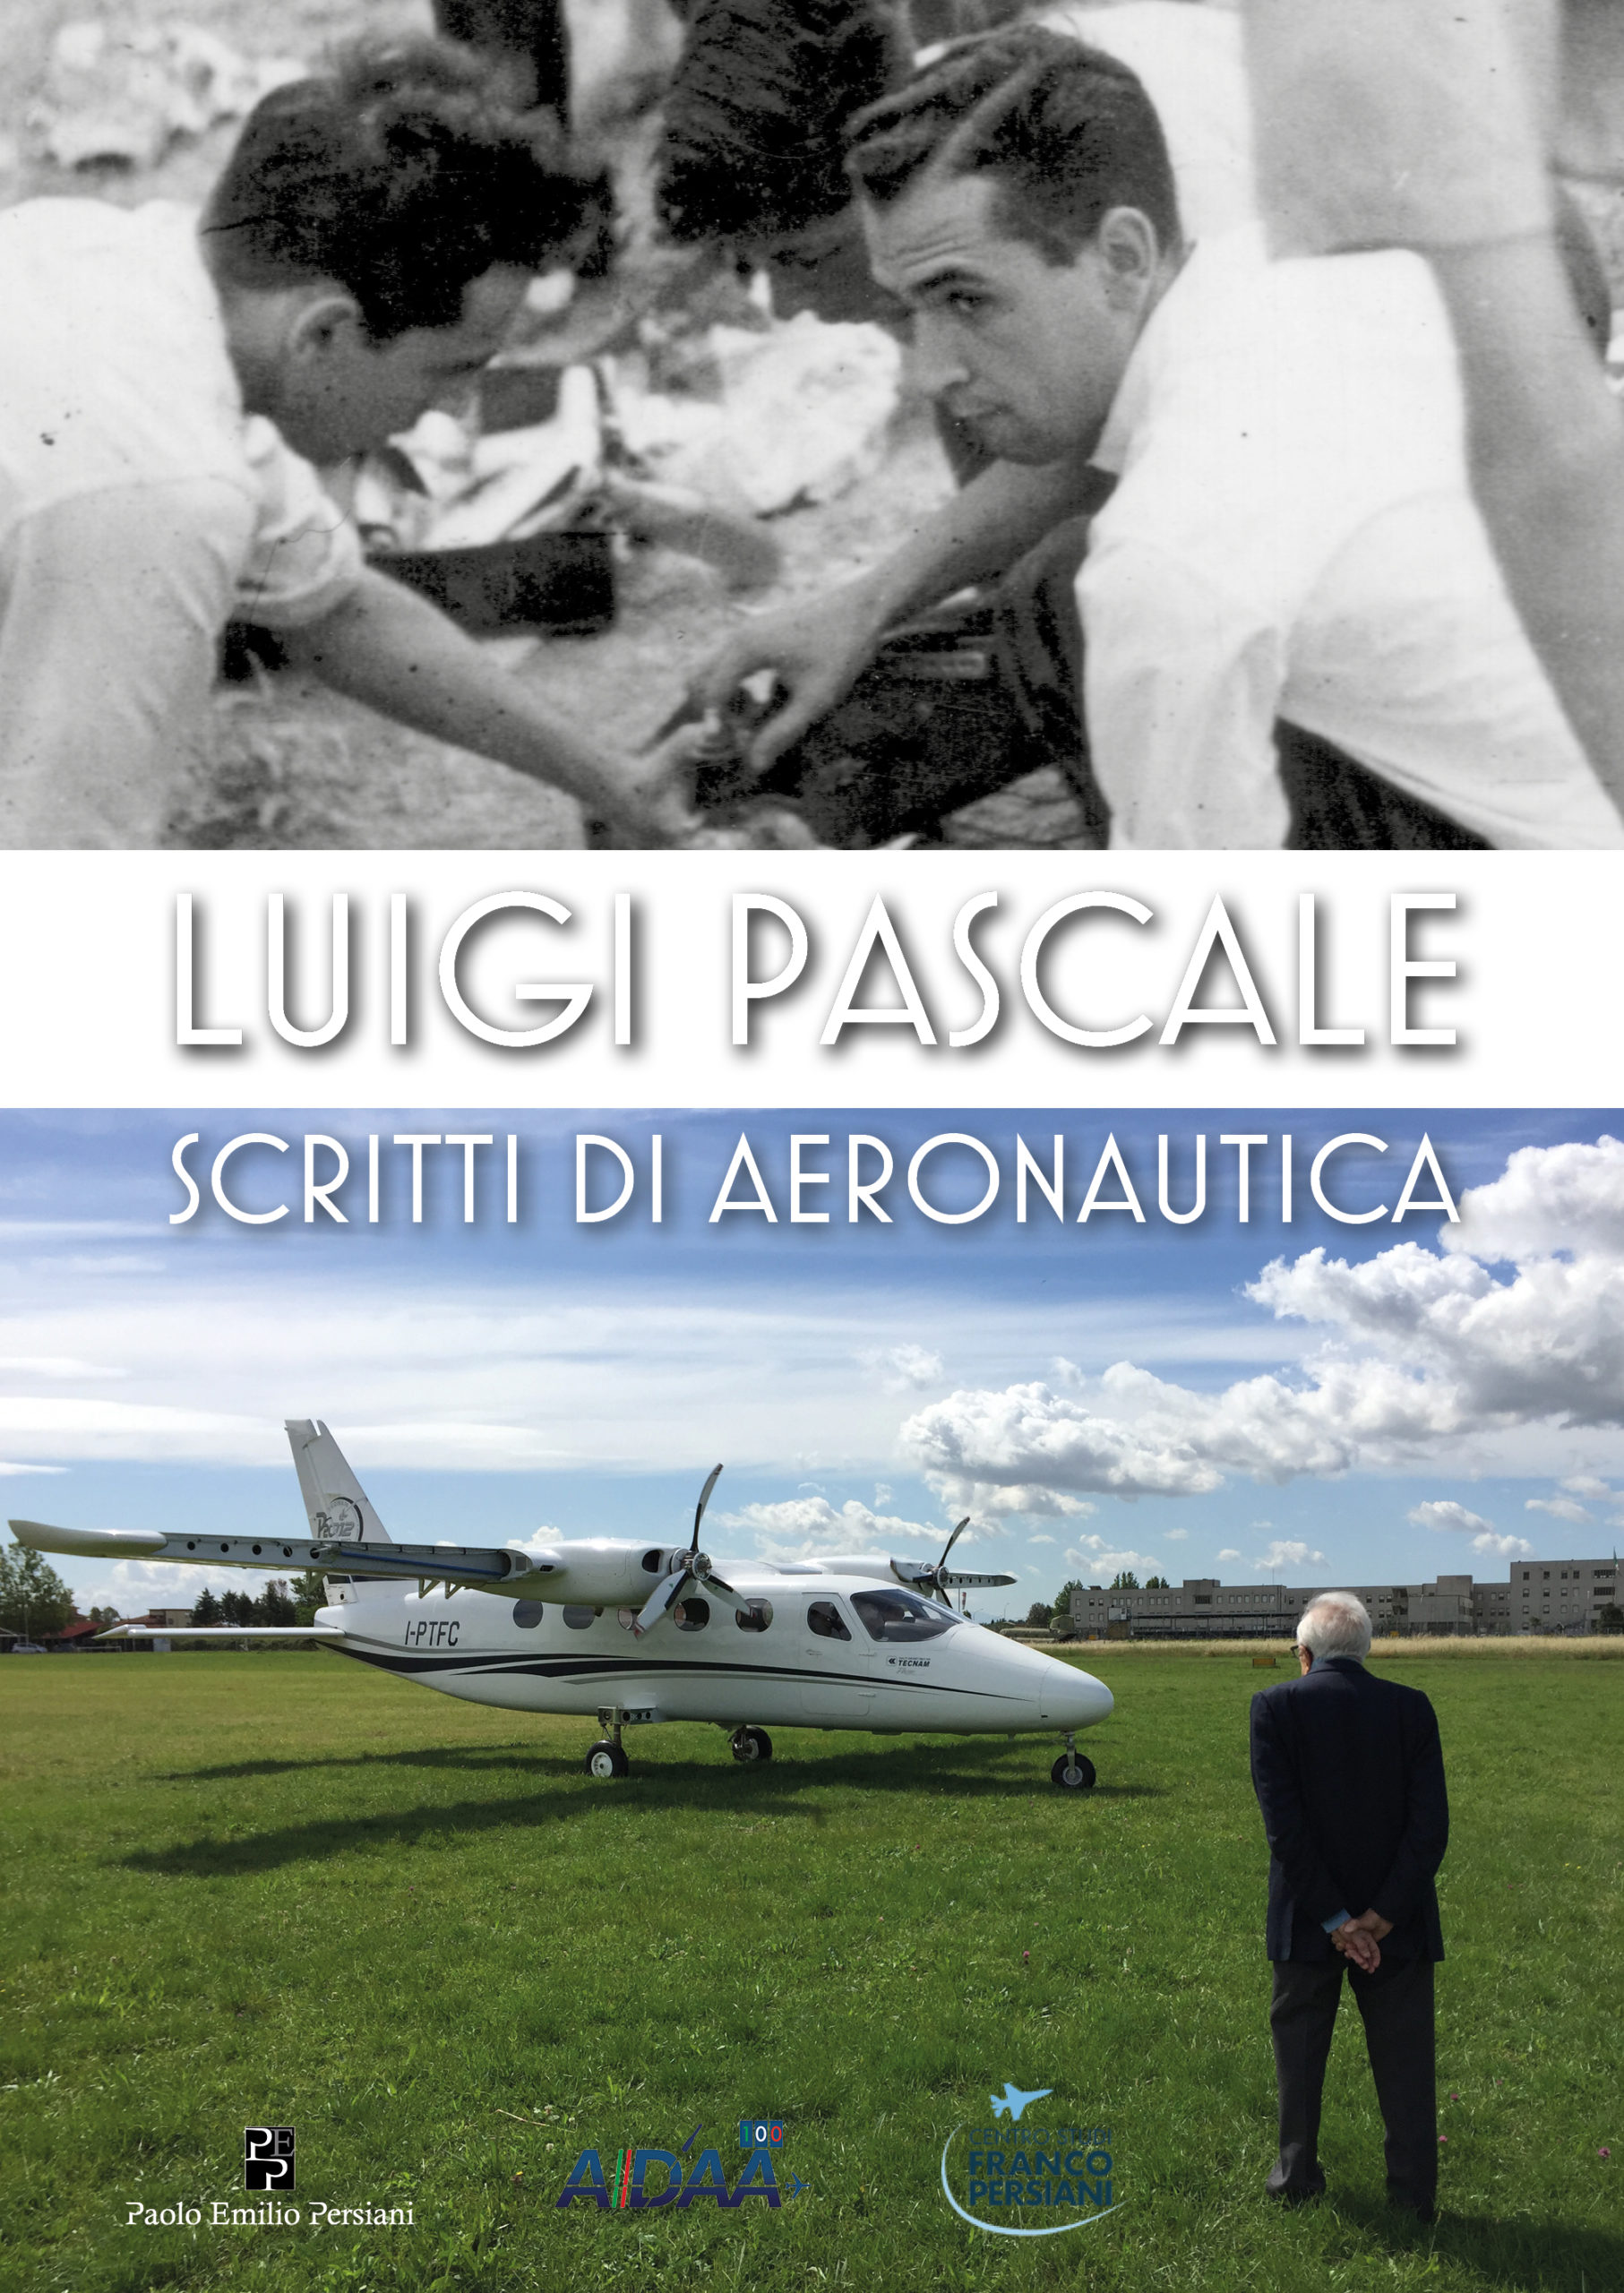 Luigi Pascale